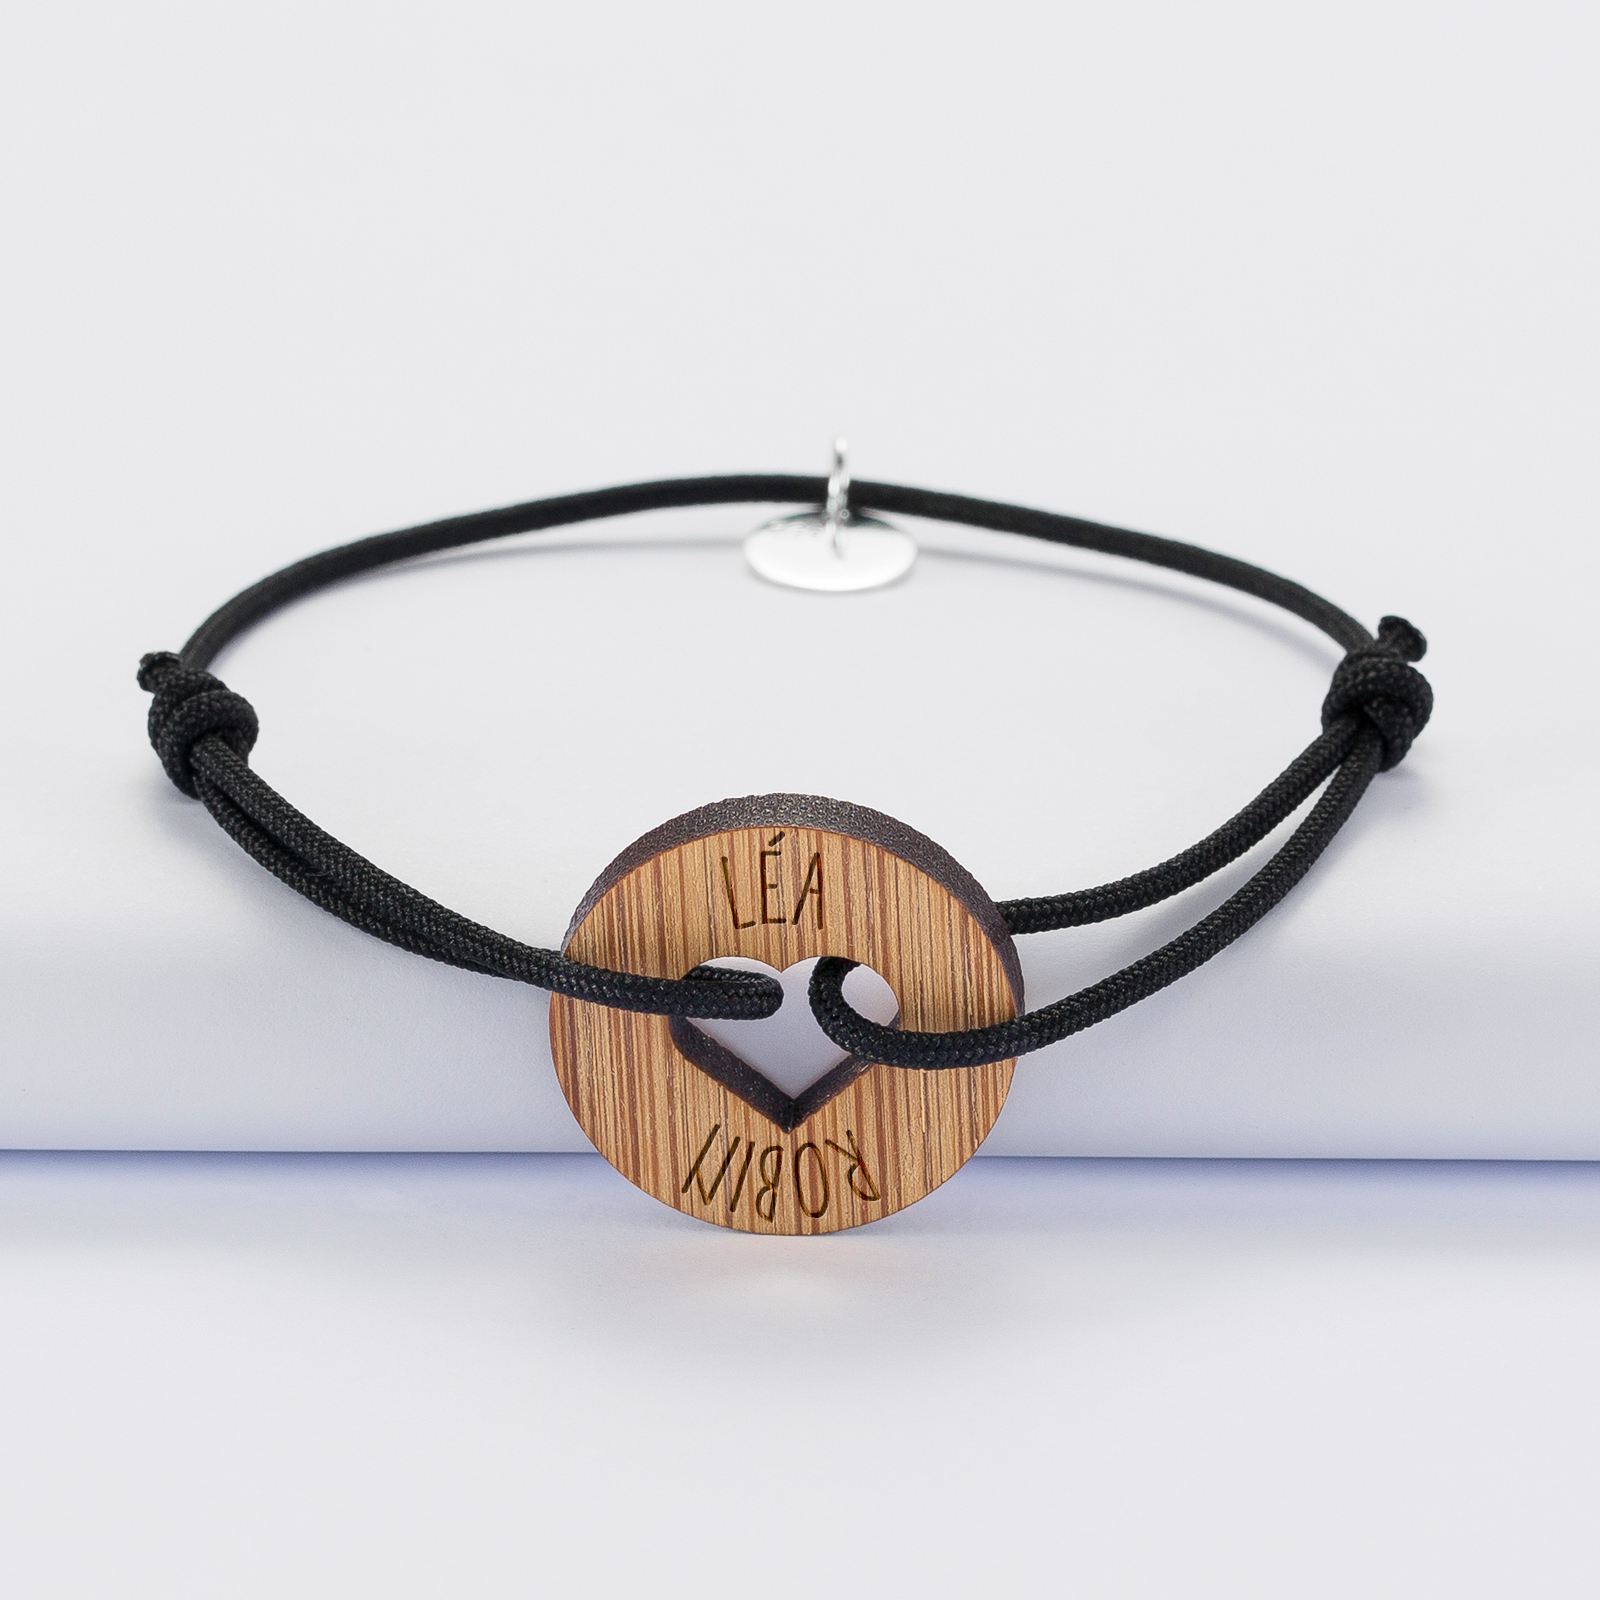 Personalised engraved wooden heart target medallion bracelet 21mm - name